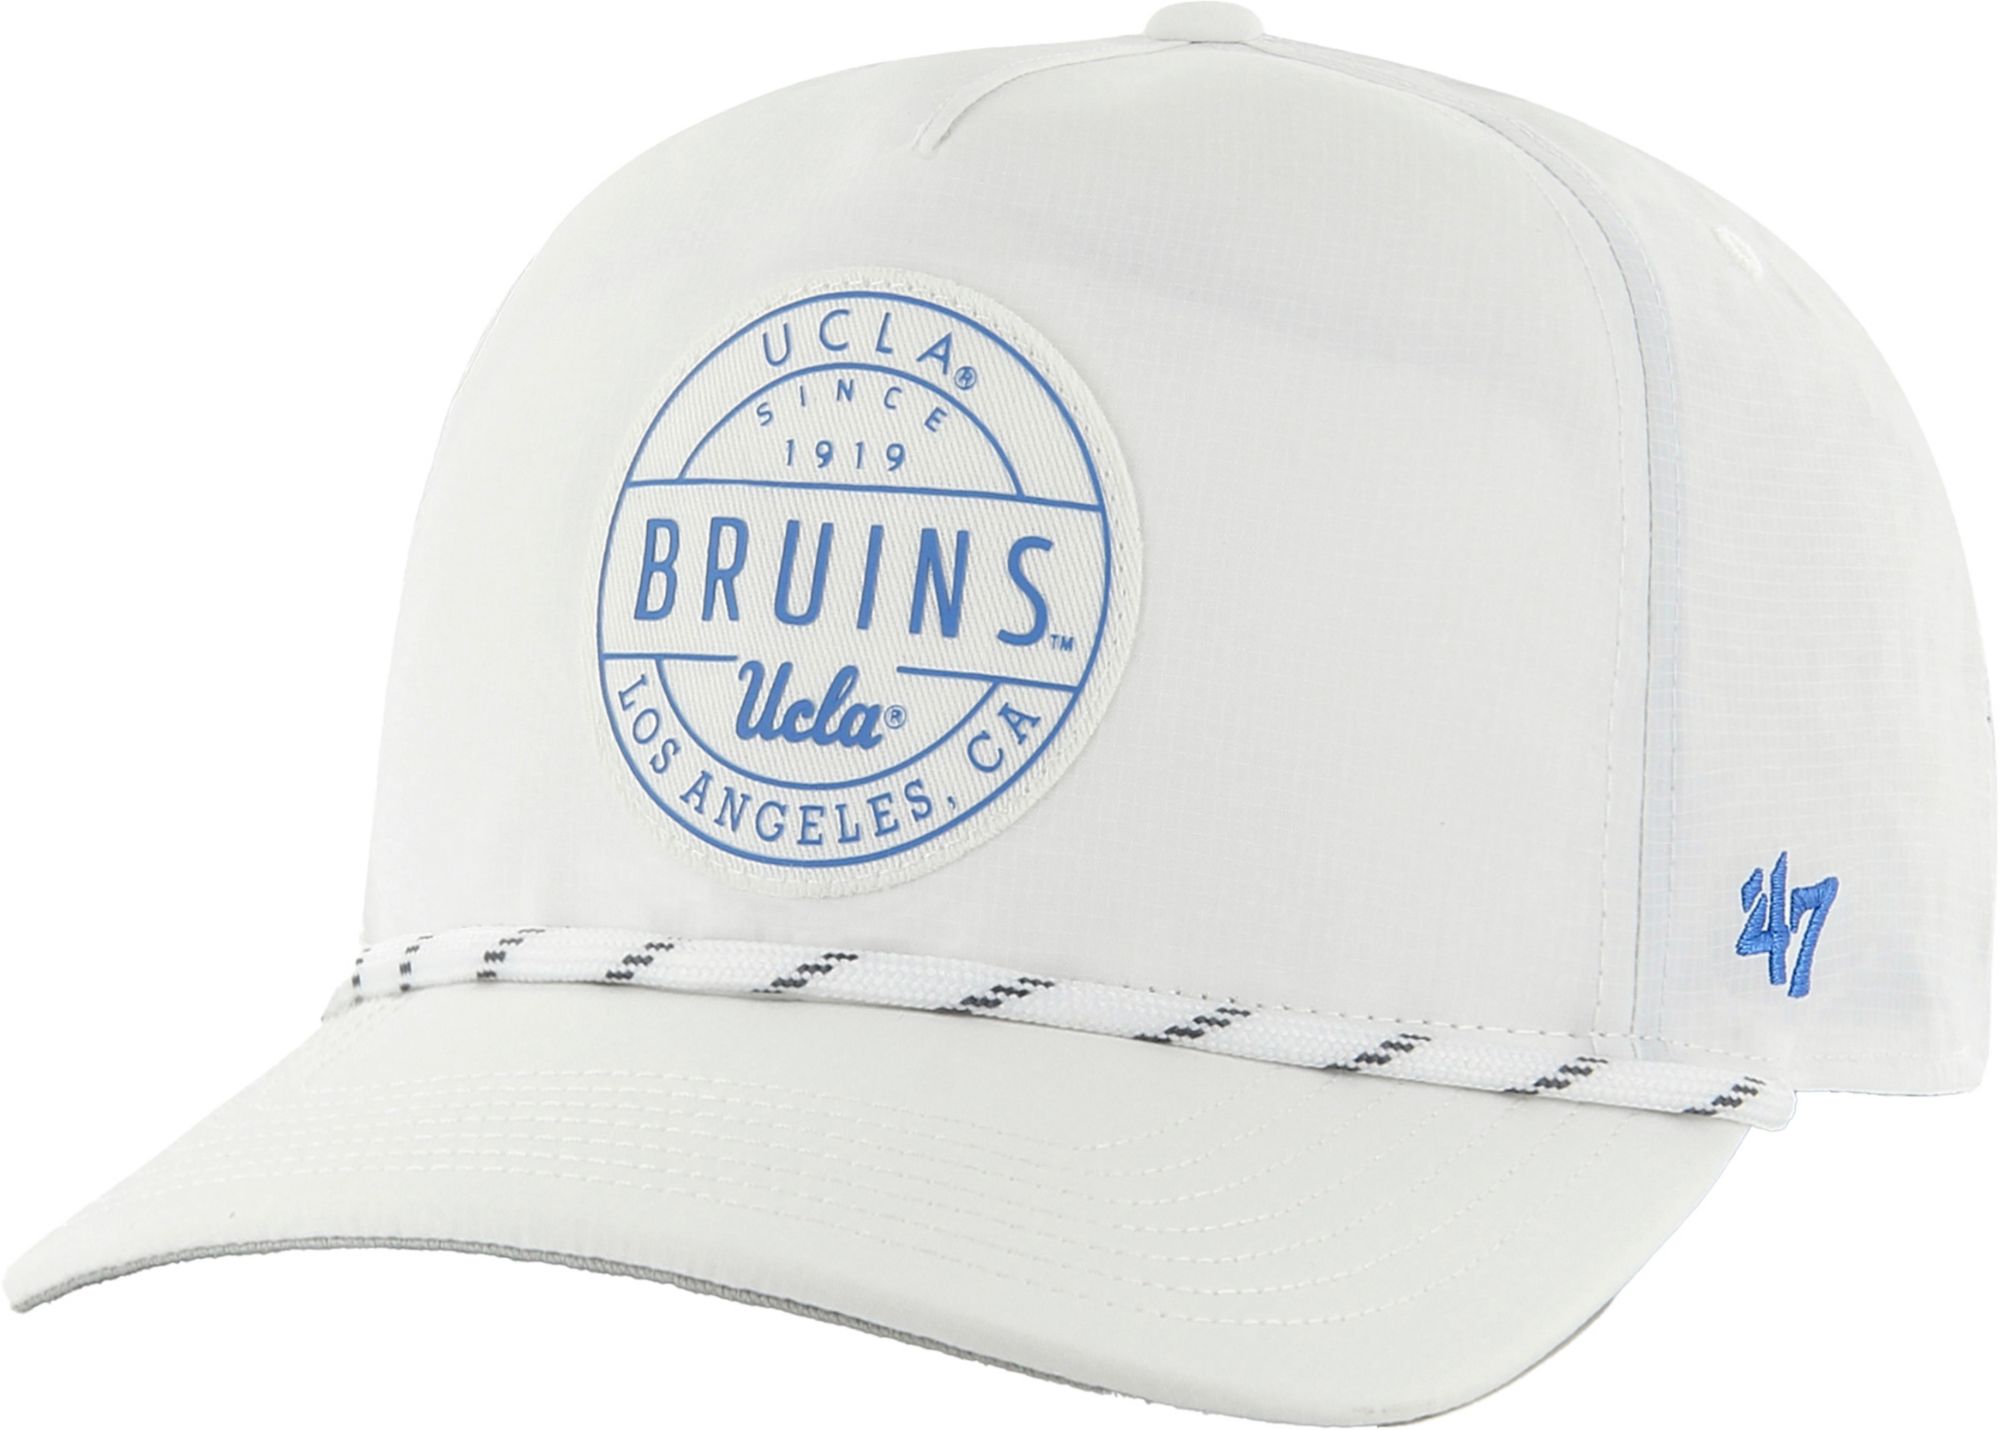 UCLA Bruins Vintage 9FIFTY Snapback Hat, Blue, by New Era